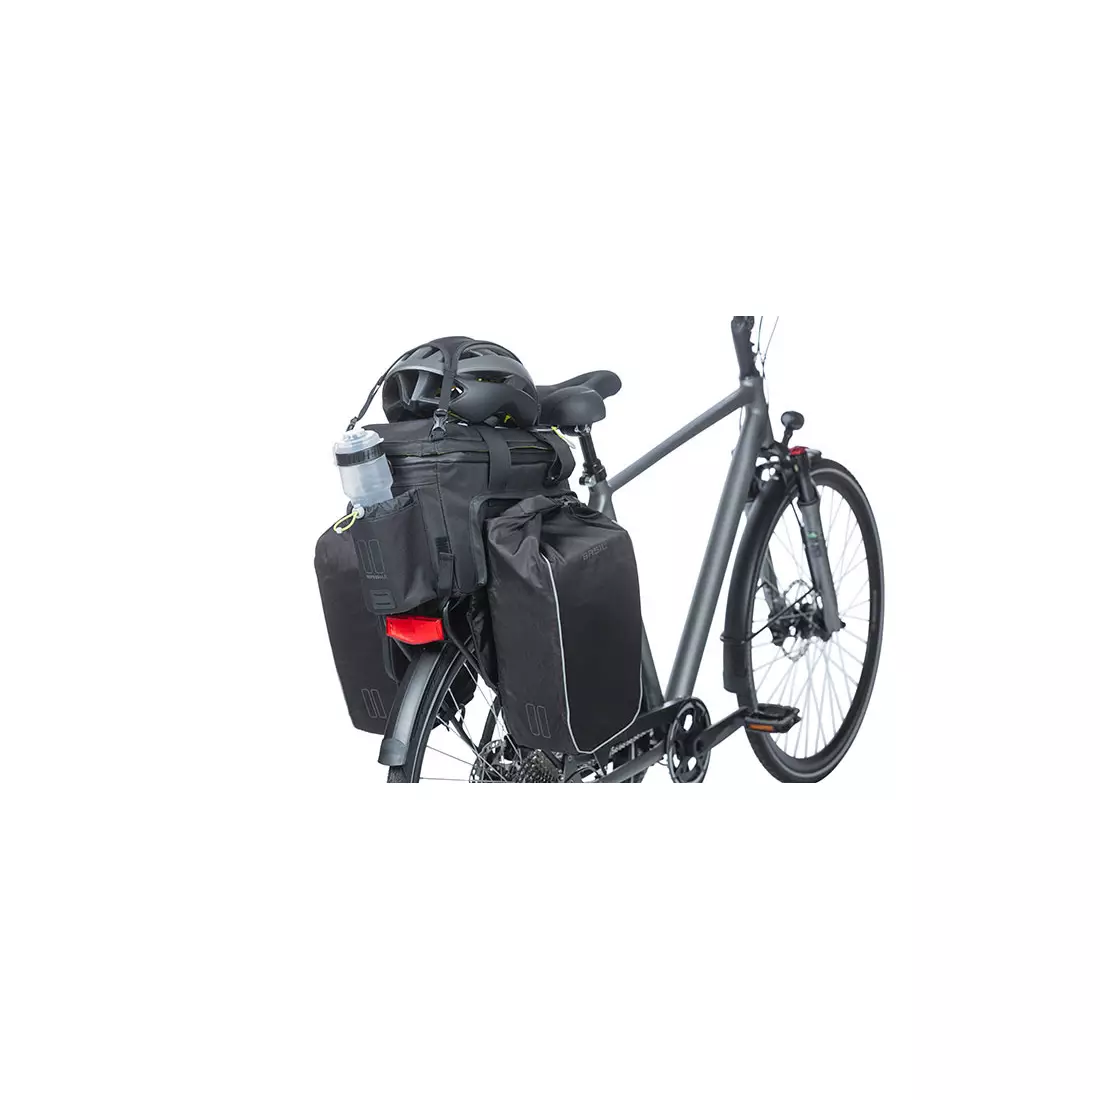 BASIL Fahrradkoffer, auf dem Stamm TRUNKBAG XL Pro, 9-36L, black lime 18295